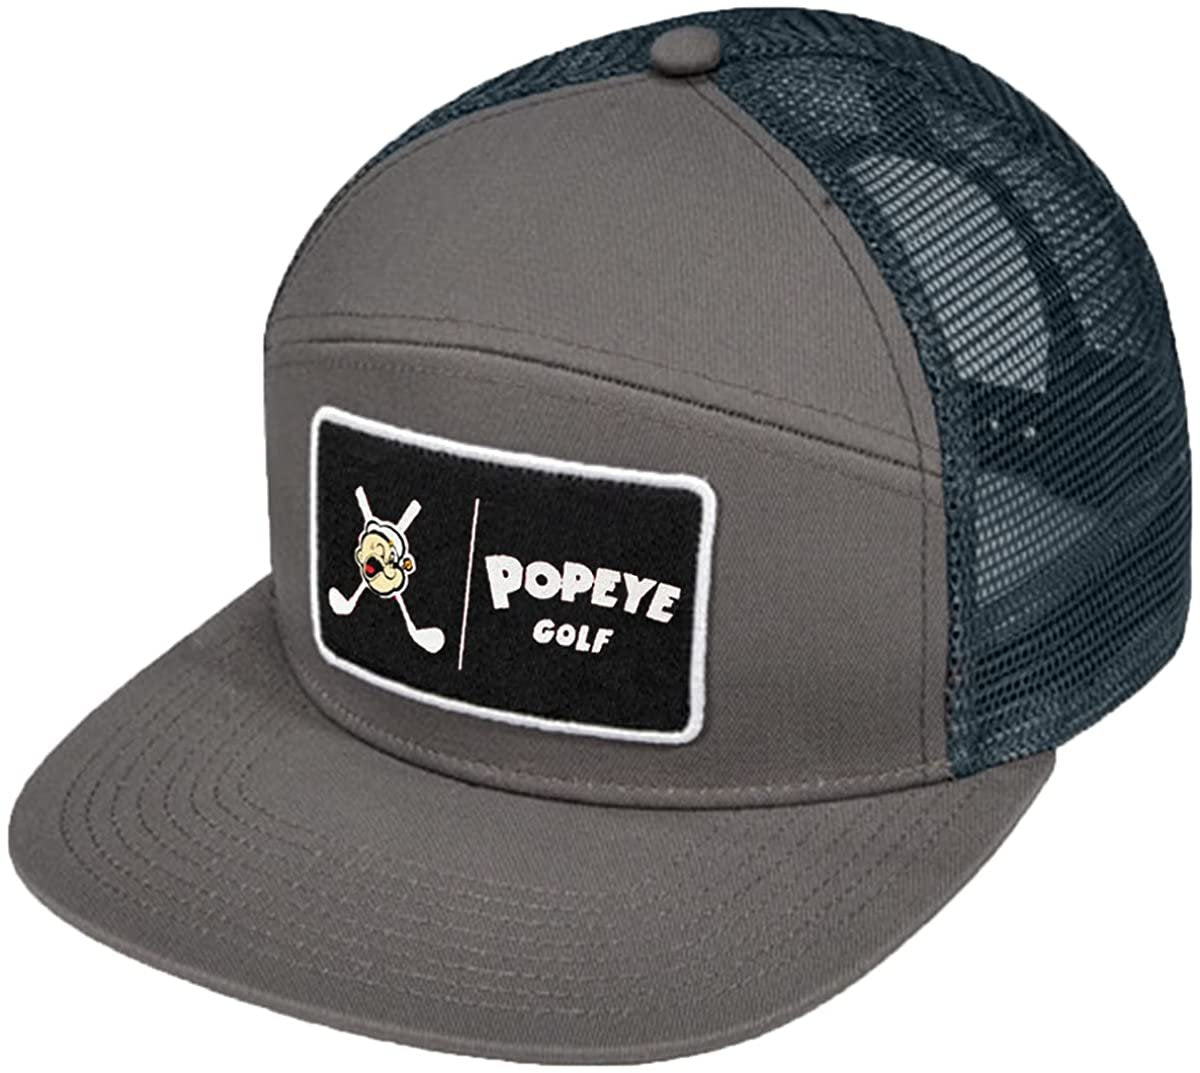 Mesh Snapback Hat Trucker Popeye Tradesman Adjustable Golf